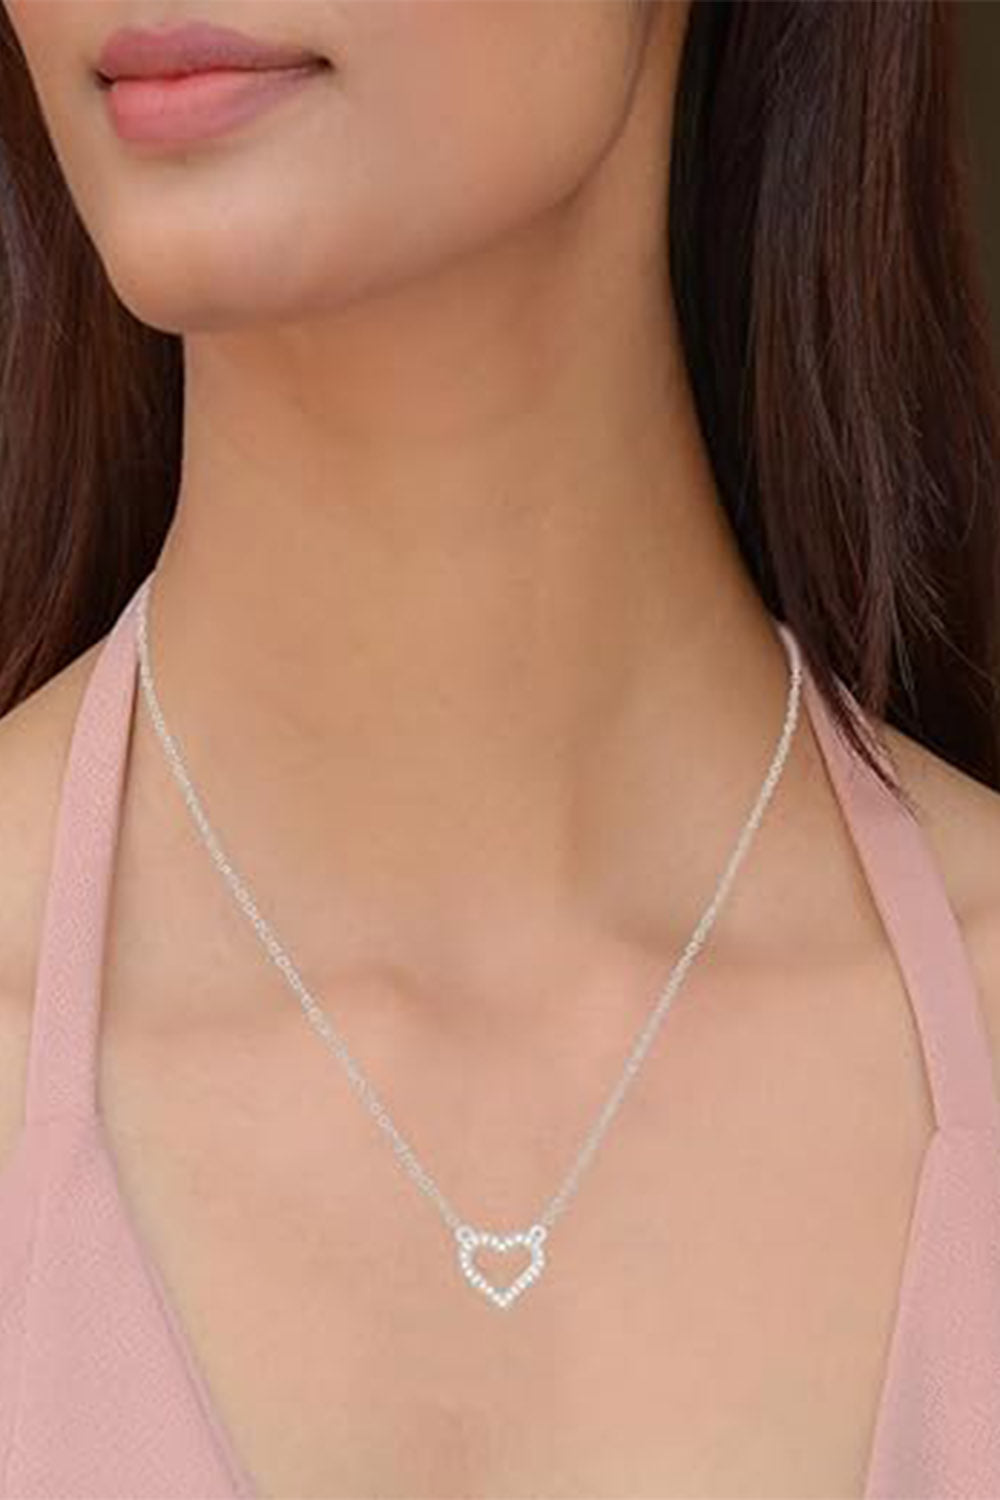 Yaathi Open Heart Pendant Necklace, Pendant For Women